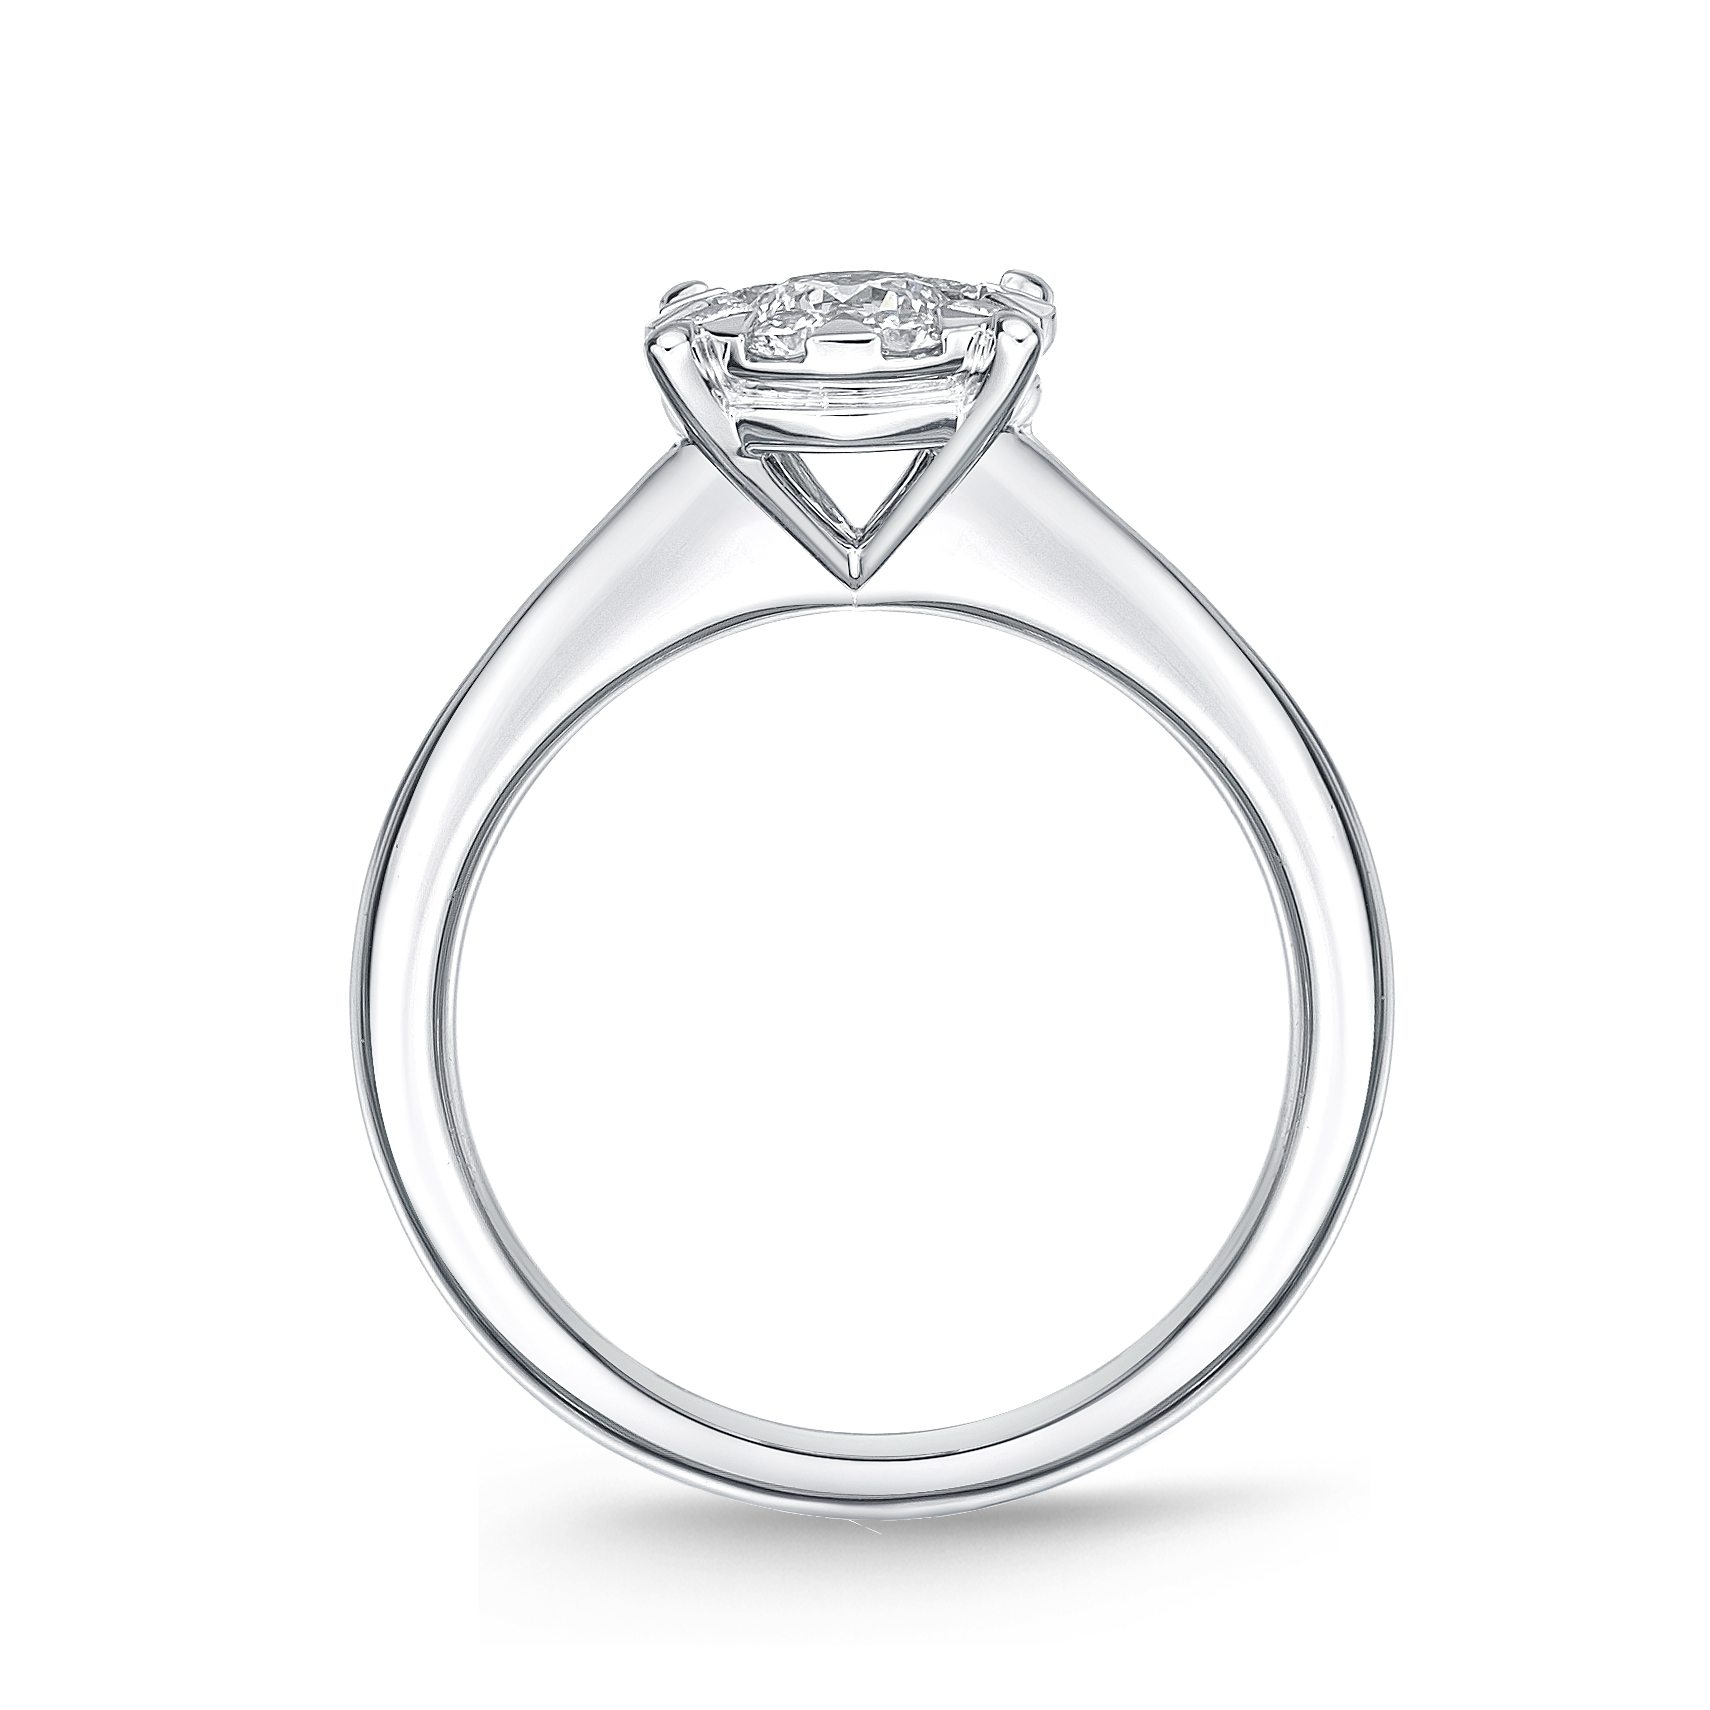 Memoire 18ct White Gold 0.60 Carat Diamond Bouquet Solitaire Ring